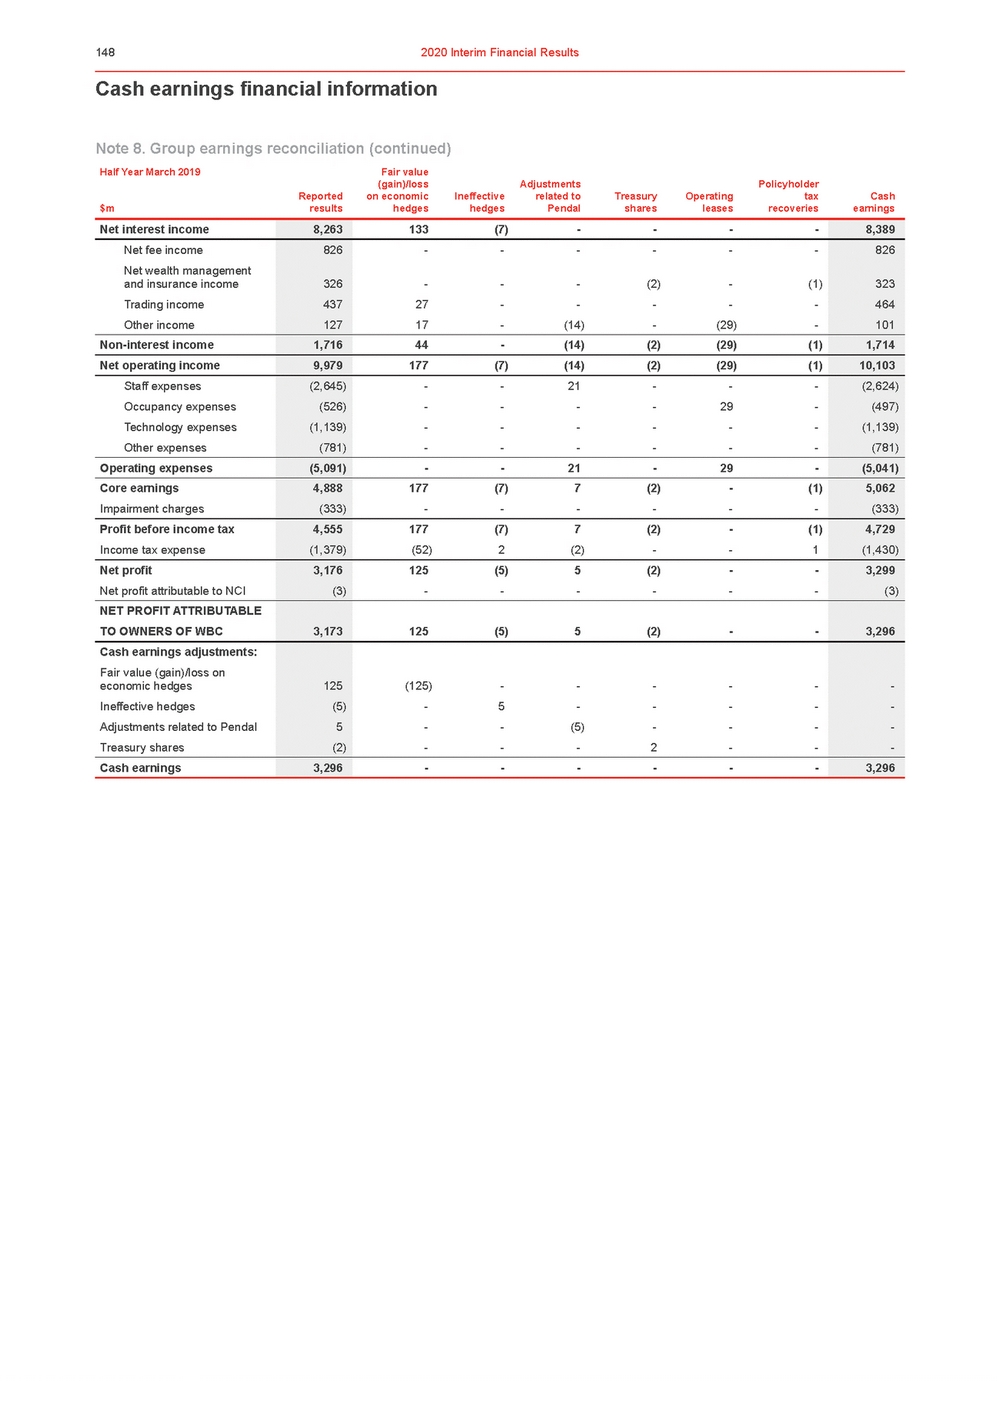 11676-3-ex1_westpac 2020 interim financial results announcement_page_153.jpg